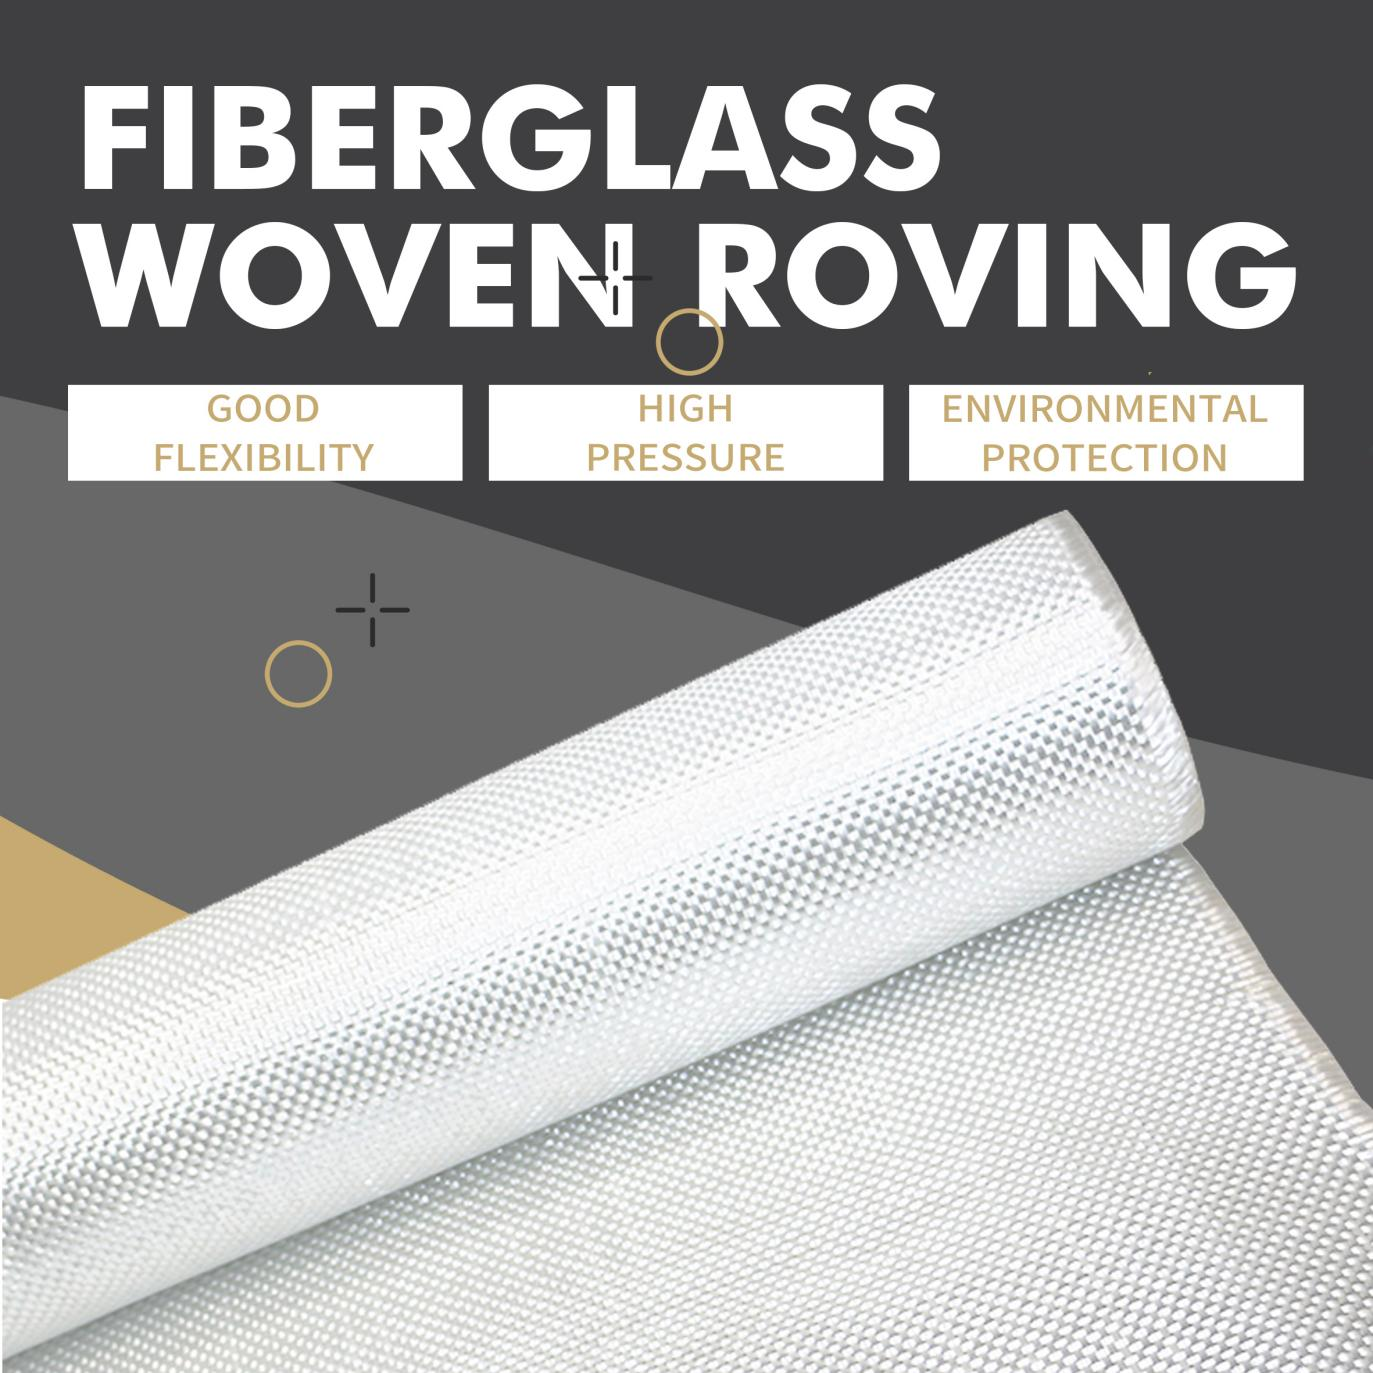 fiberglass woven roving